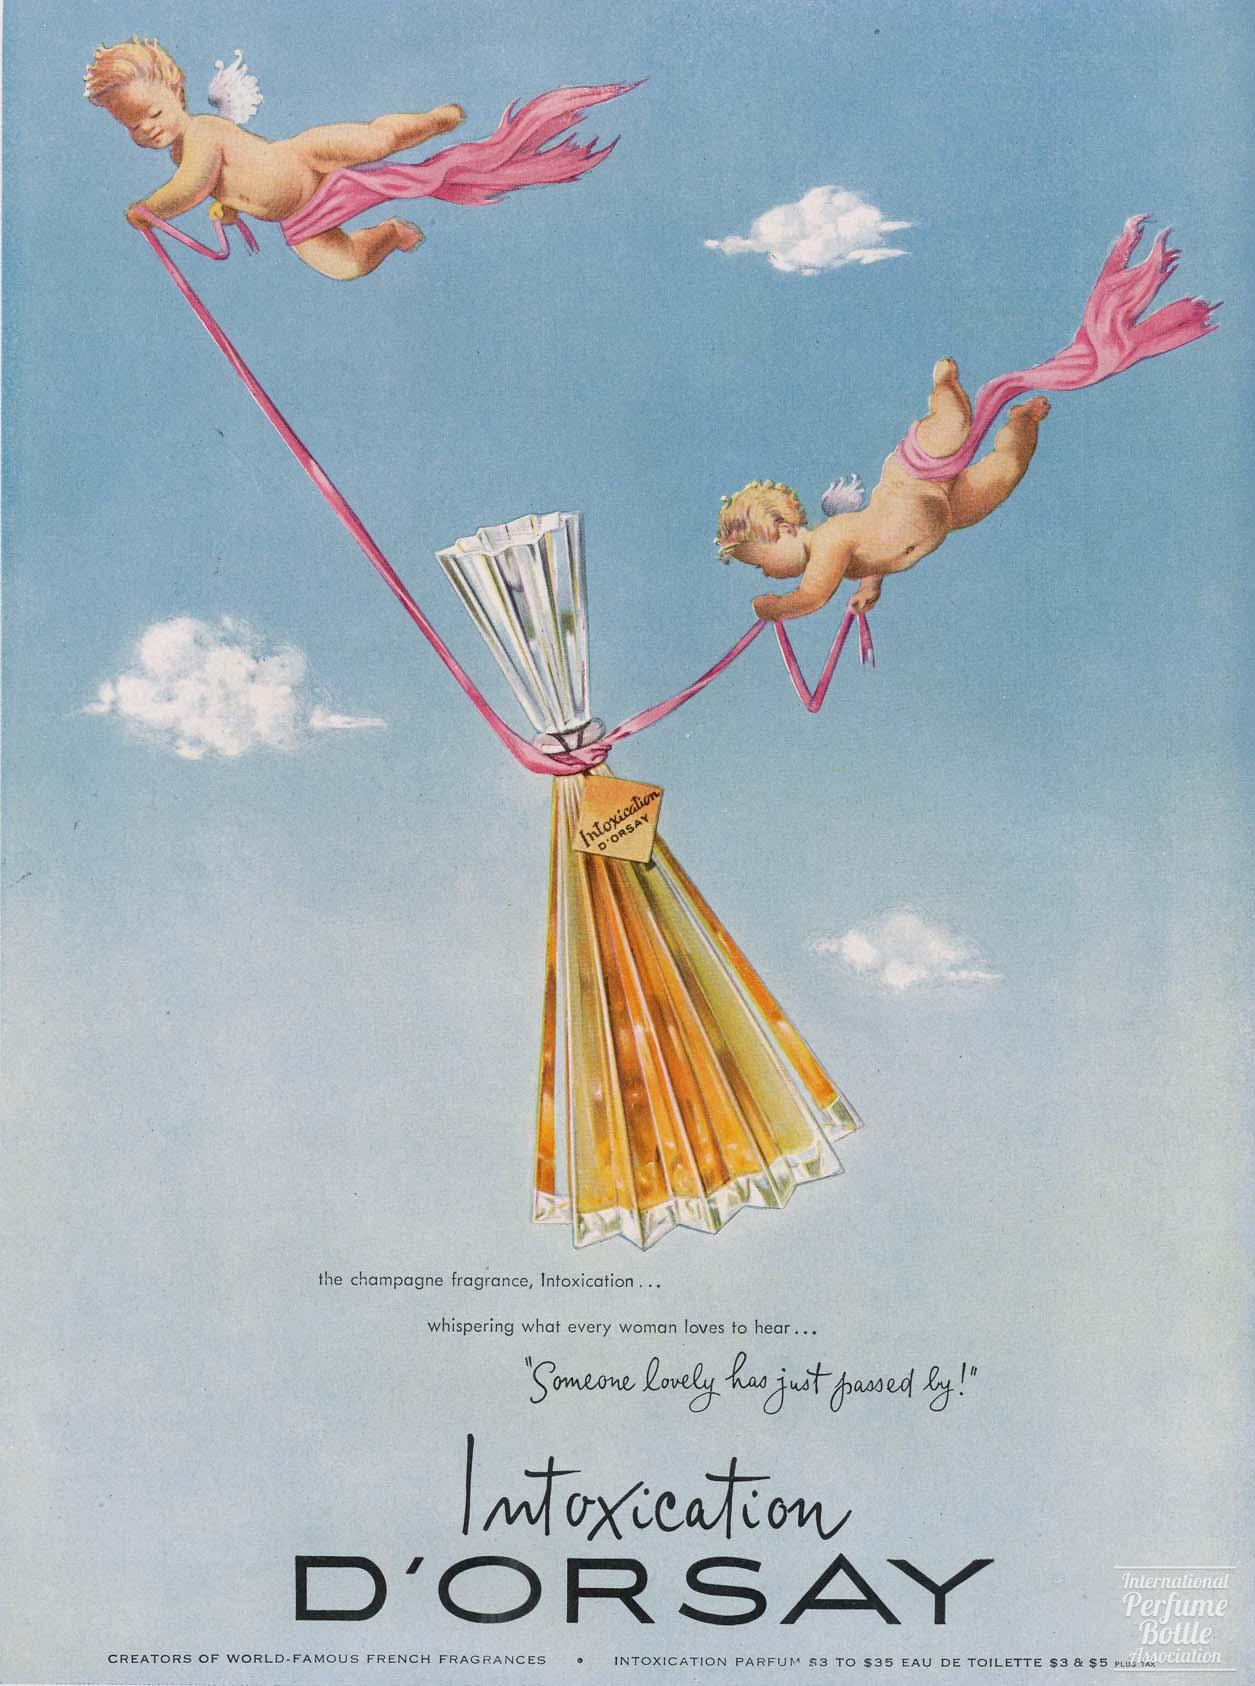 "Intoxication" by D'Orsay Cherub Advertisement - 1951